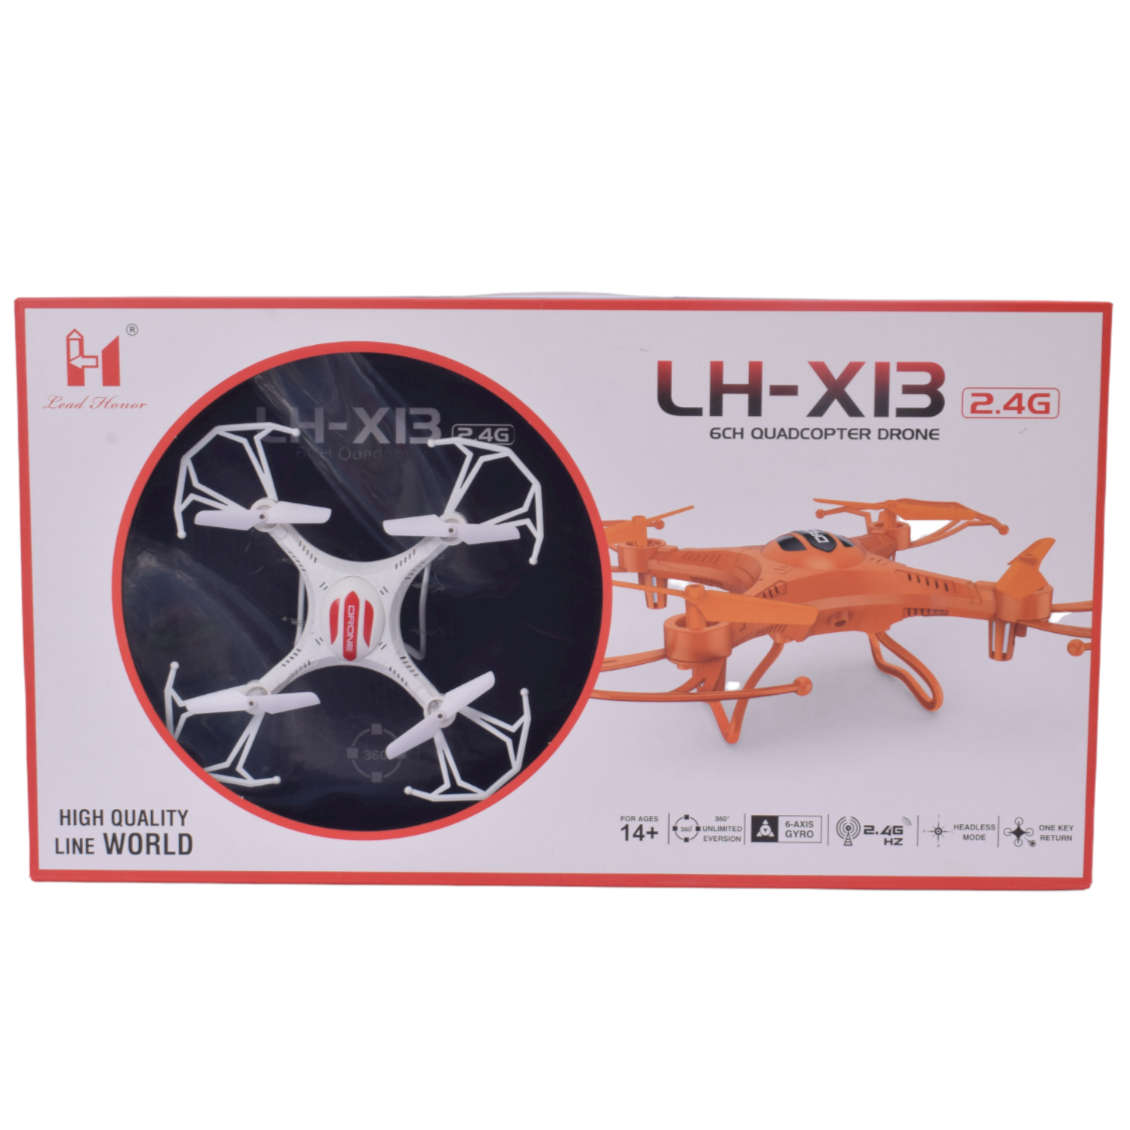 Drone Quadcopter - LH-X13